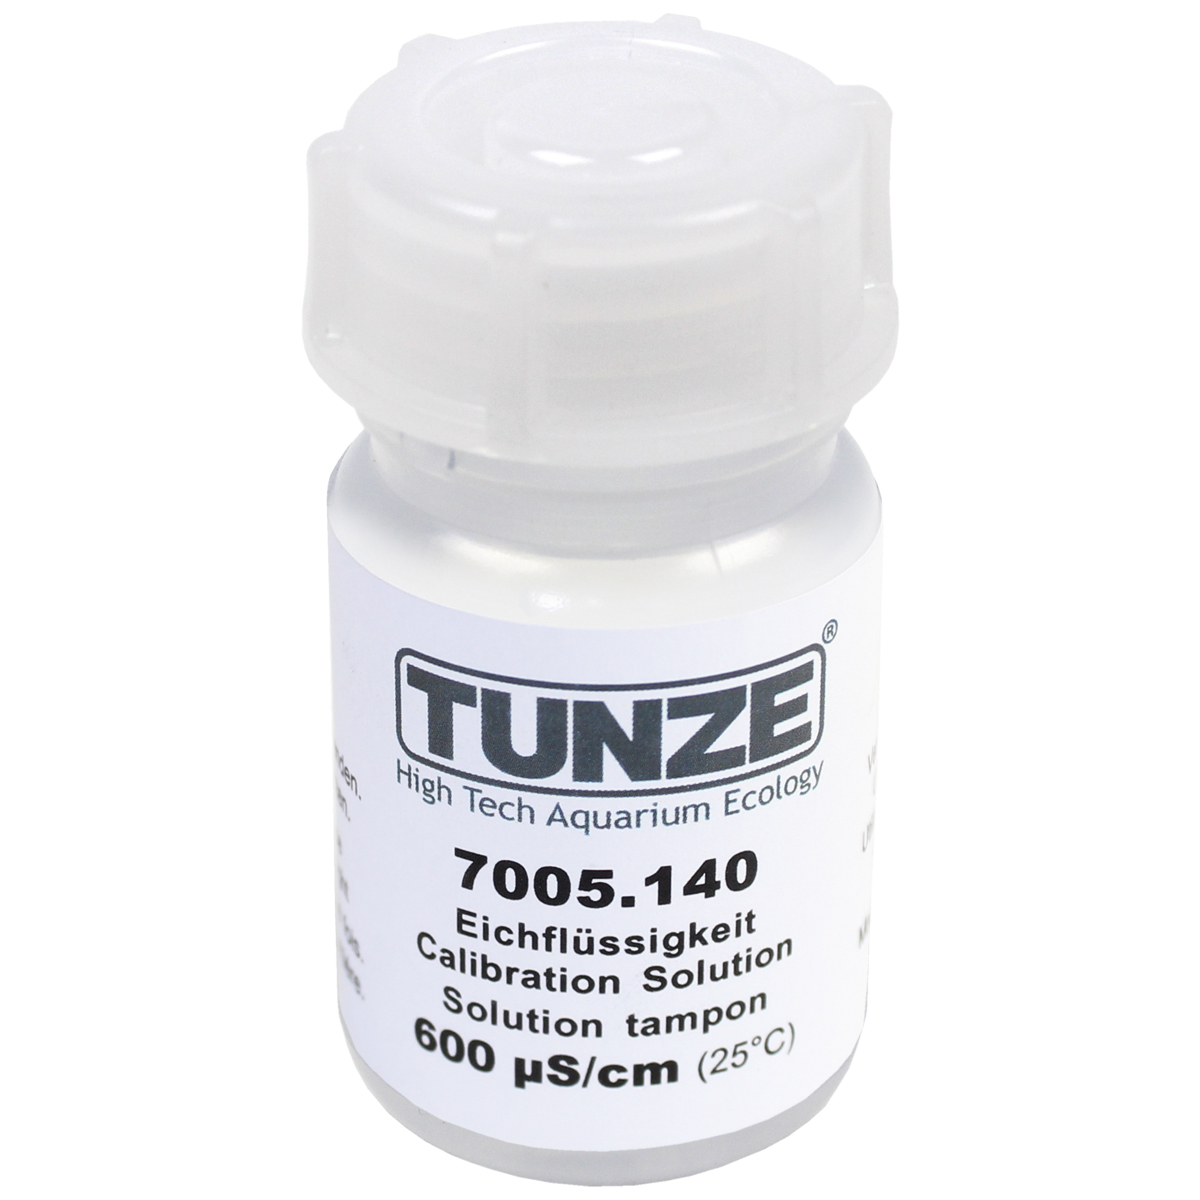 Tunze Calibration solution 600 µS/cm (7005.140) 2